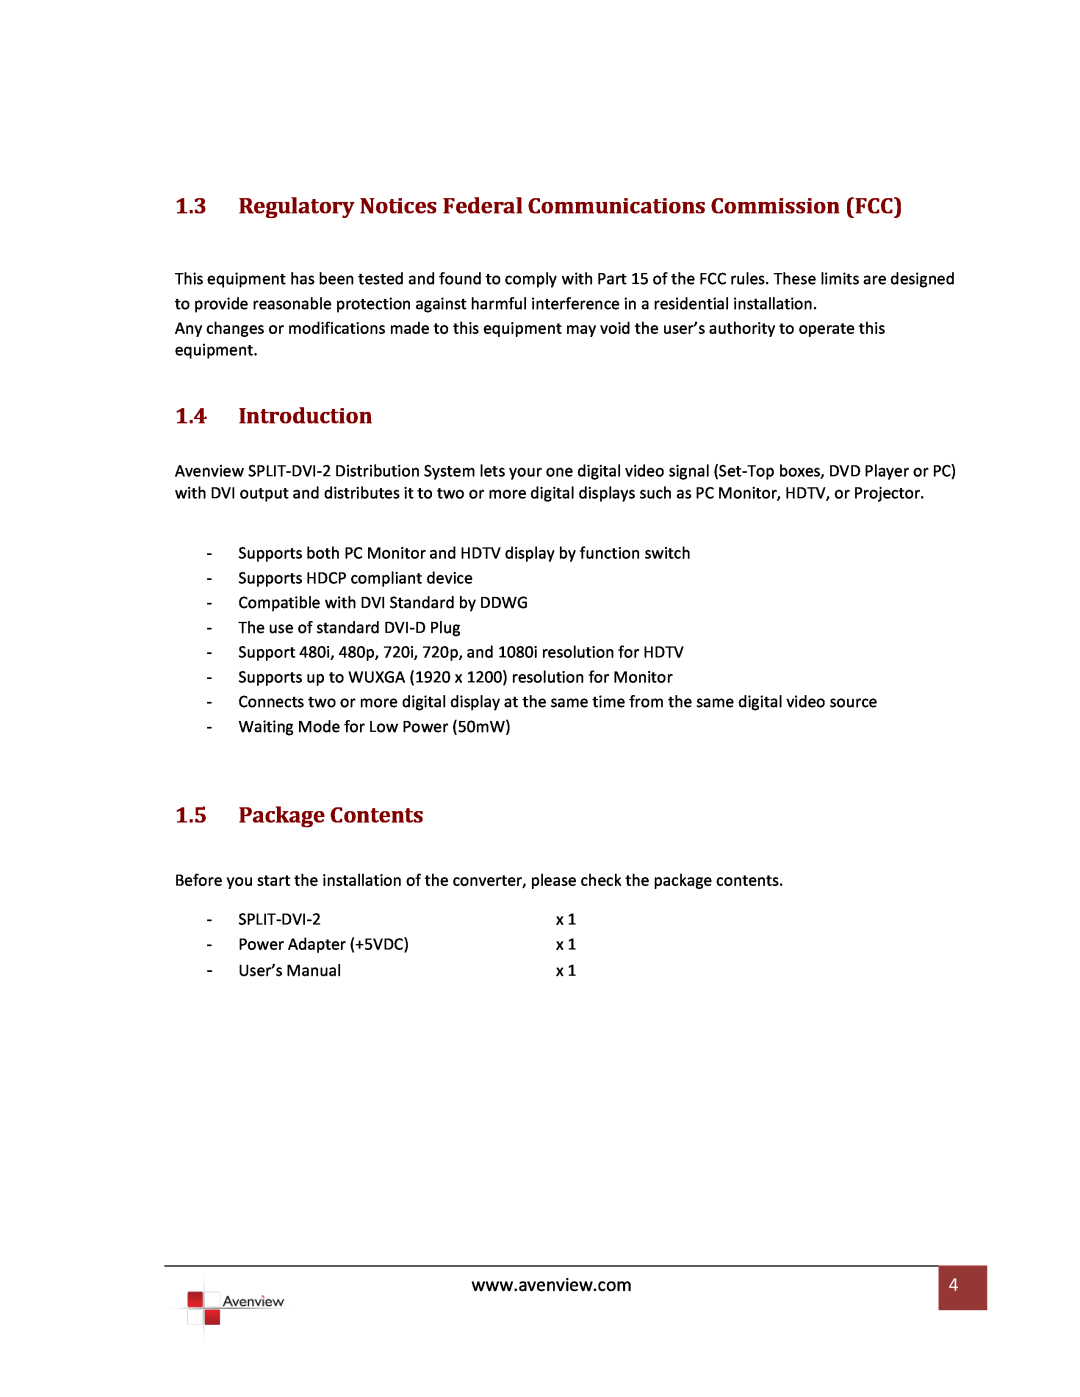 Avenview SPLIT-DVI-2 Regulatory Notices Federal Communications Commission FCC, Introduction, Package Contents 